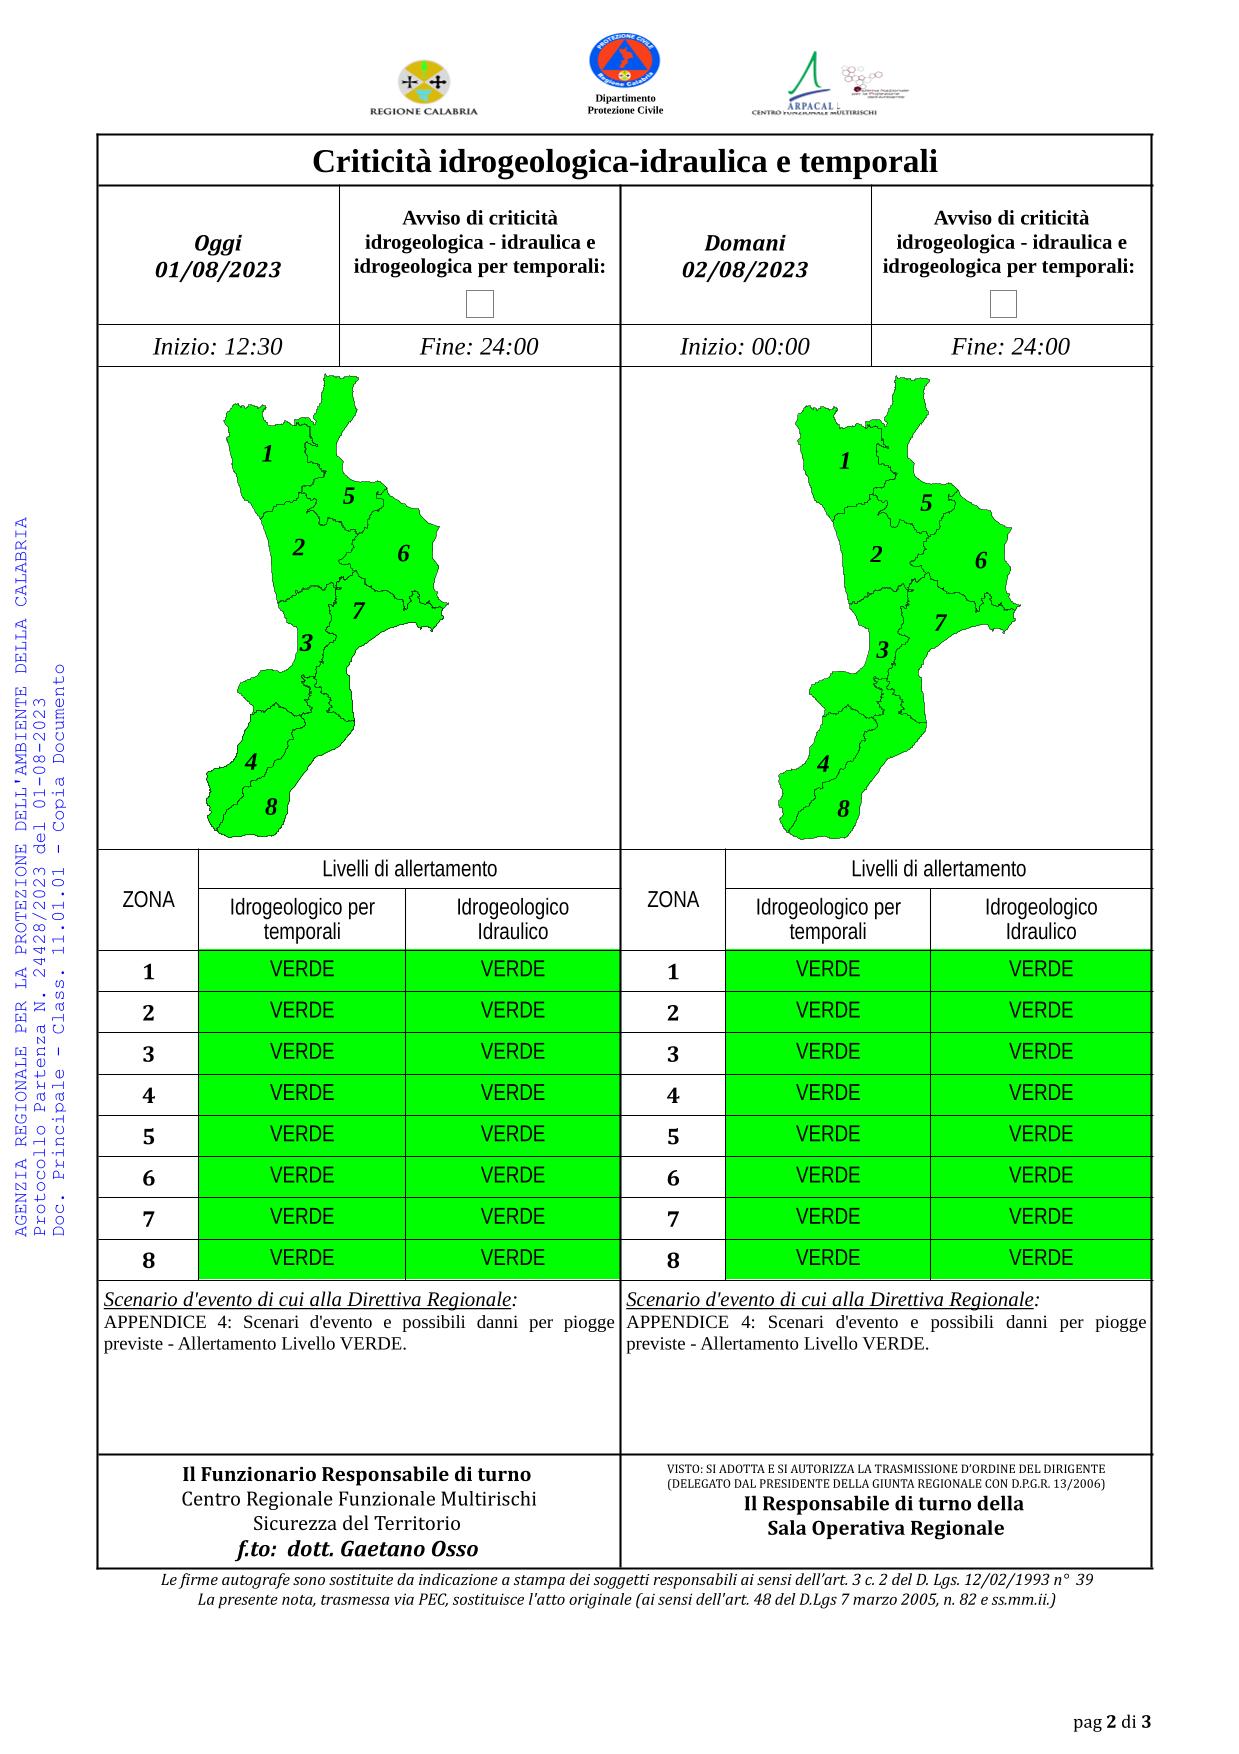 Criticità idrogeologica-idraulica e temporali in Calabria 01-08-2023